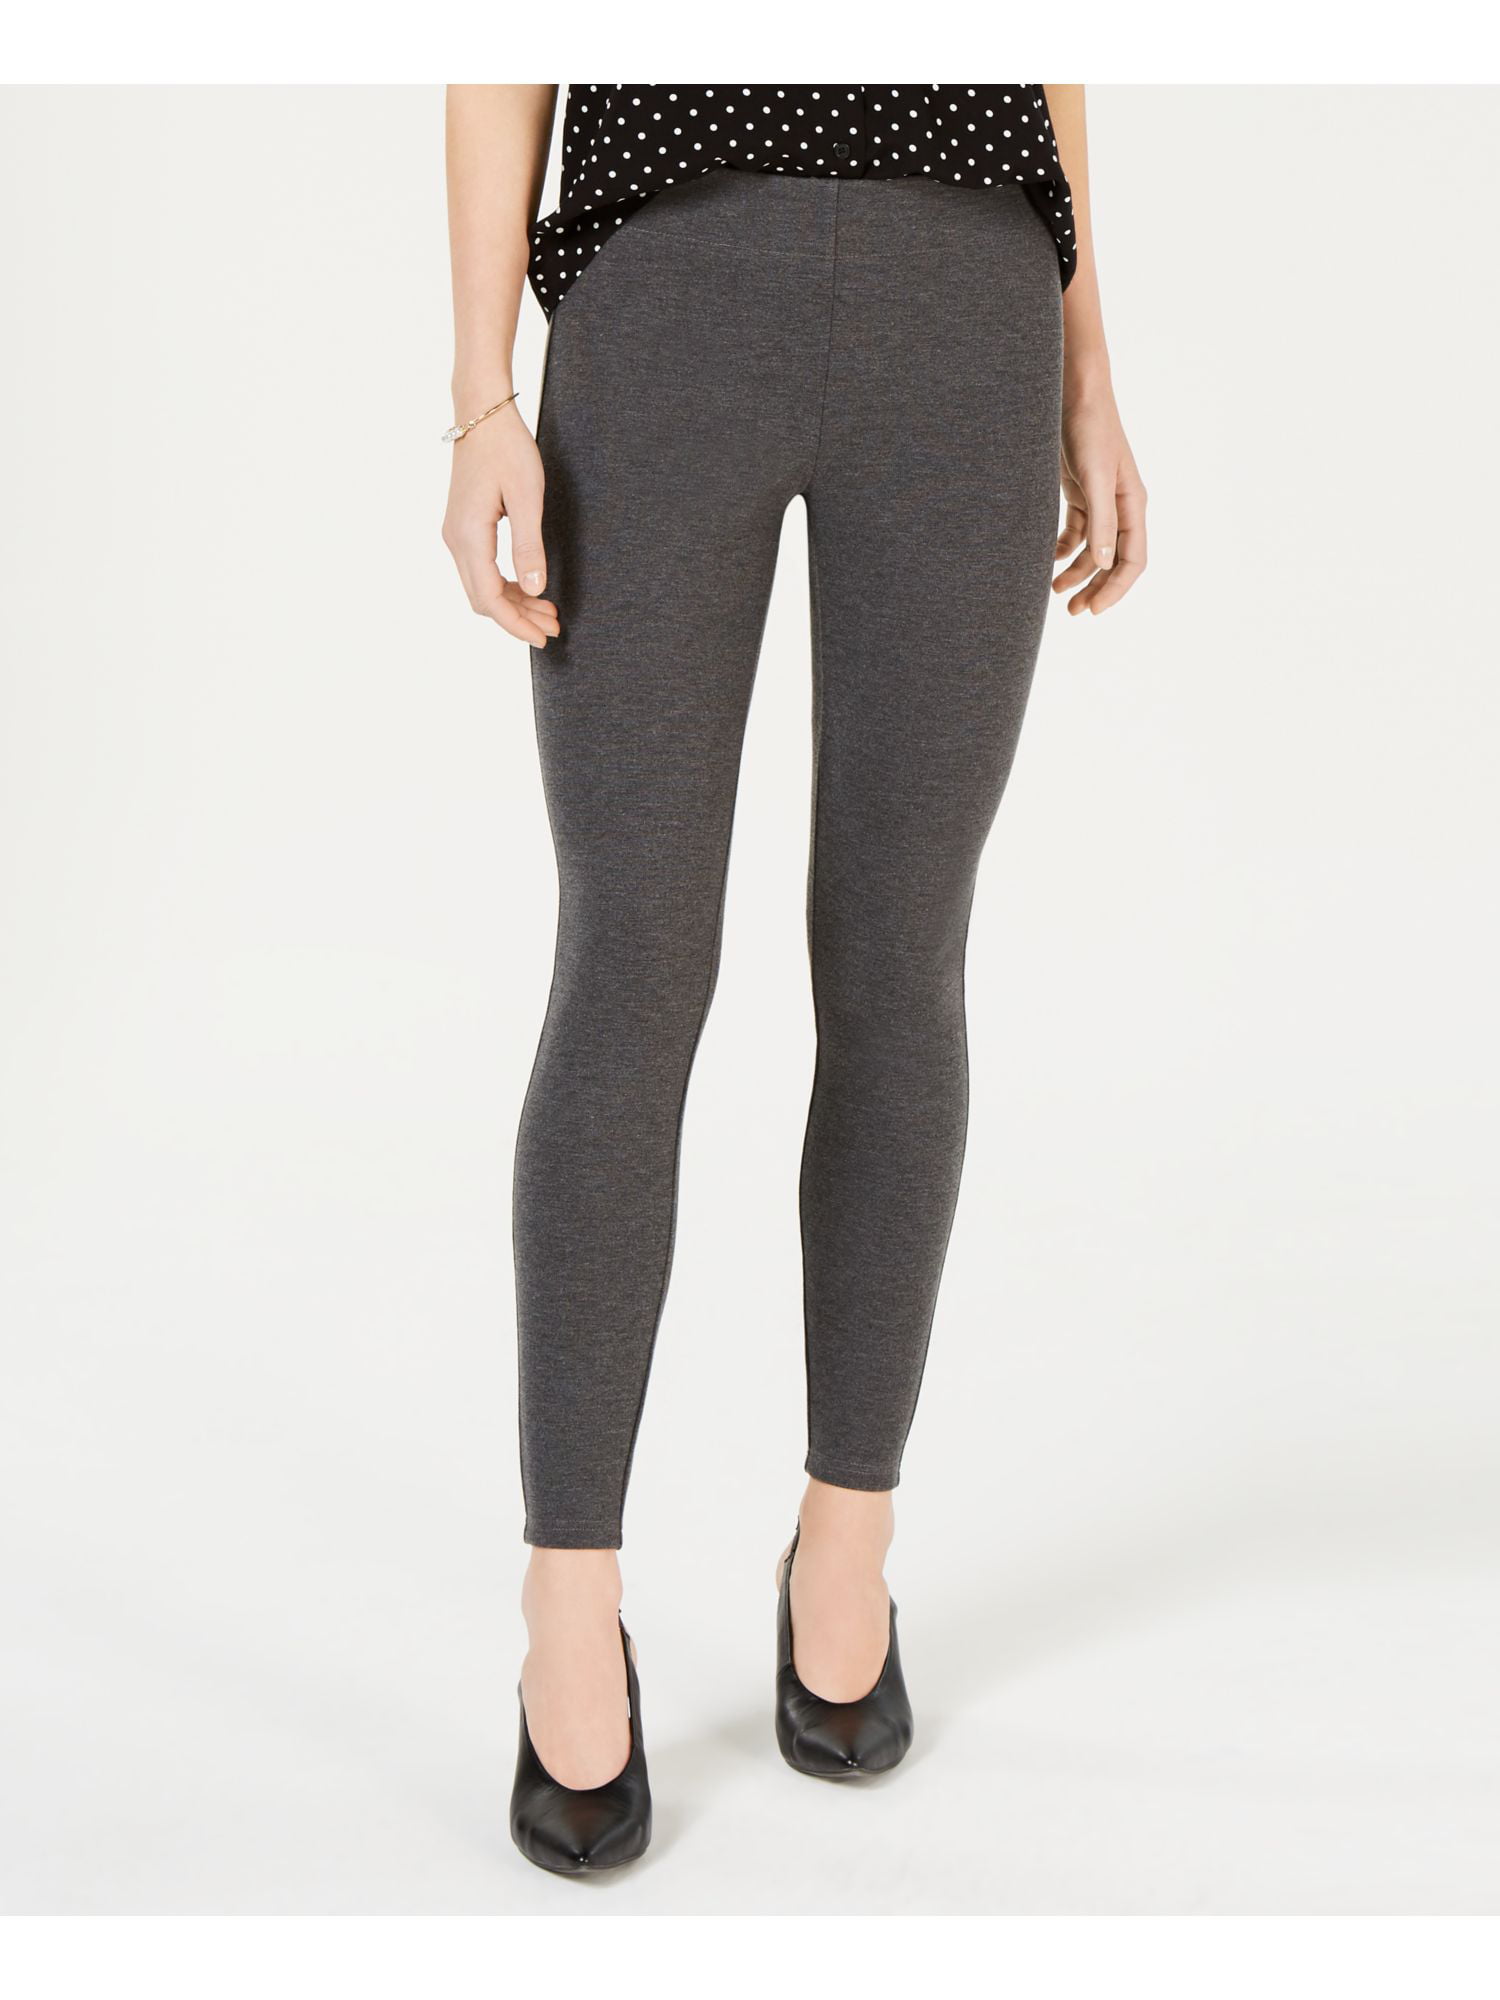 Maison Jules Womens Super Slim Casual Leggings Size X-Large Color Gray 